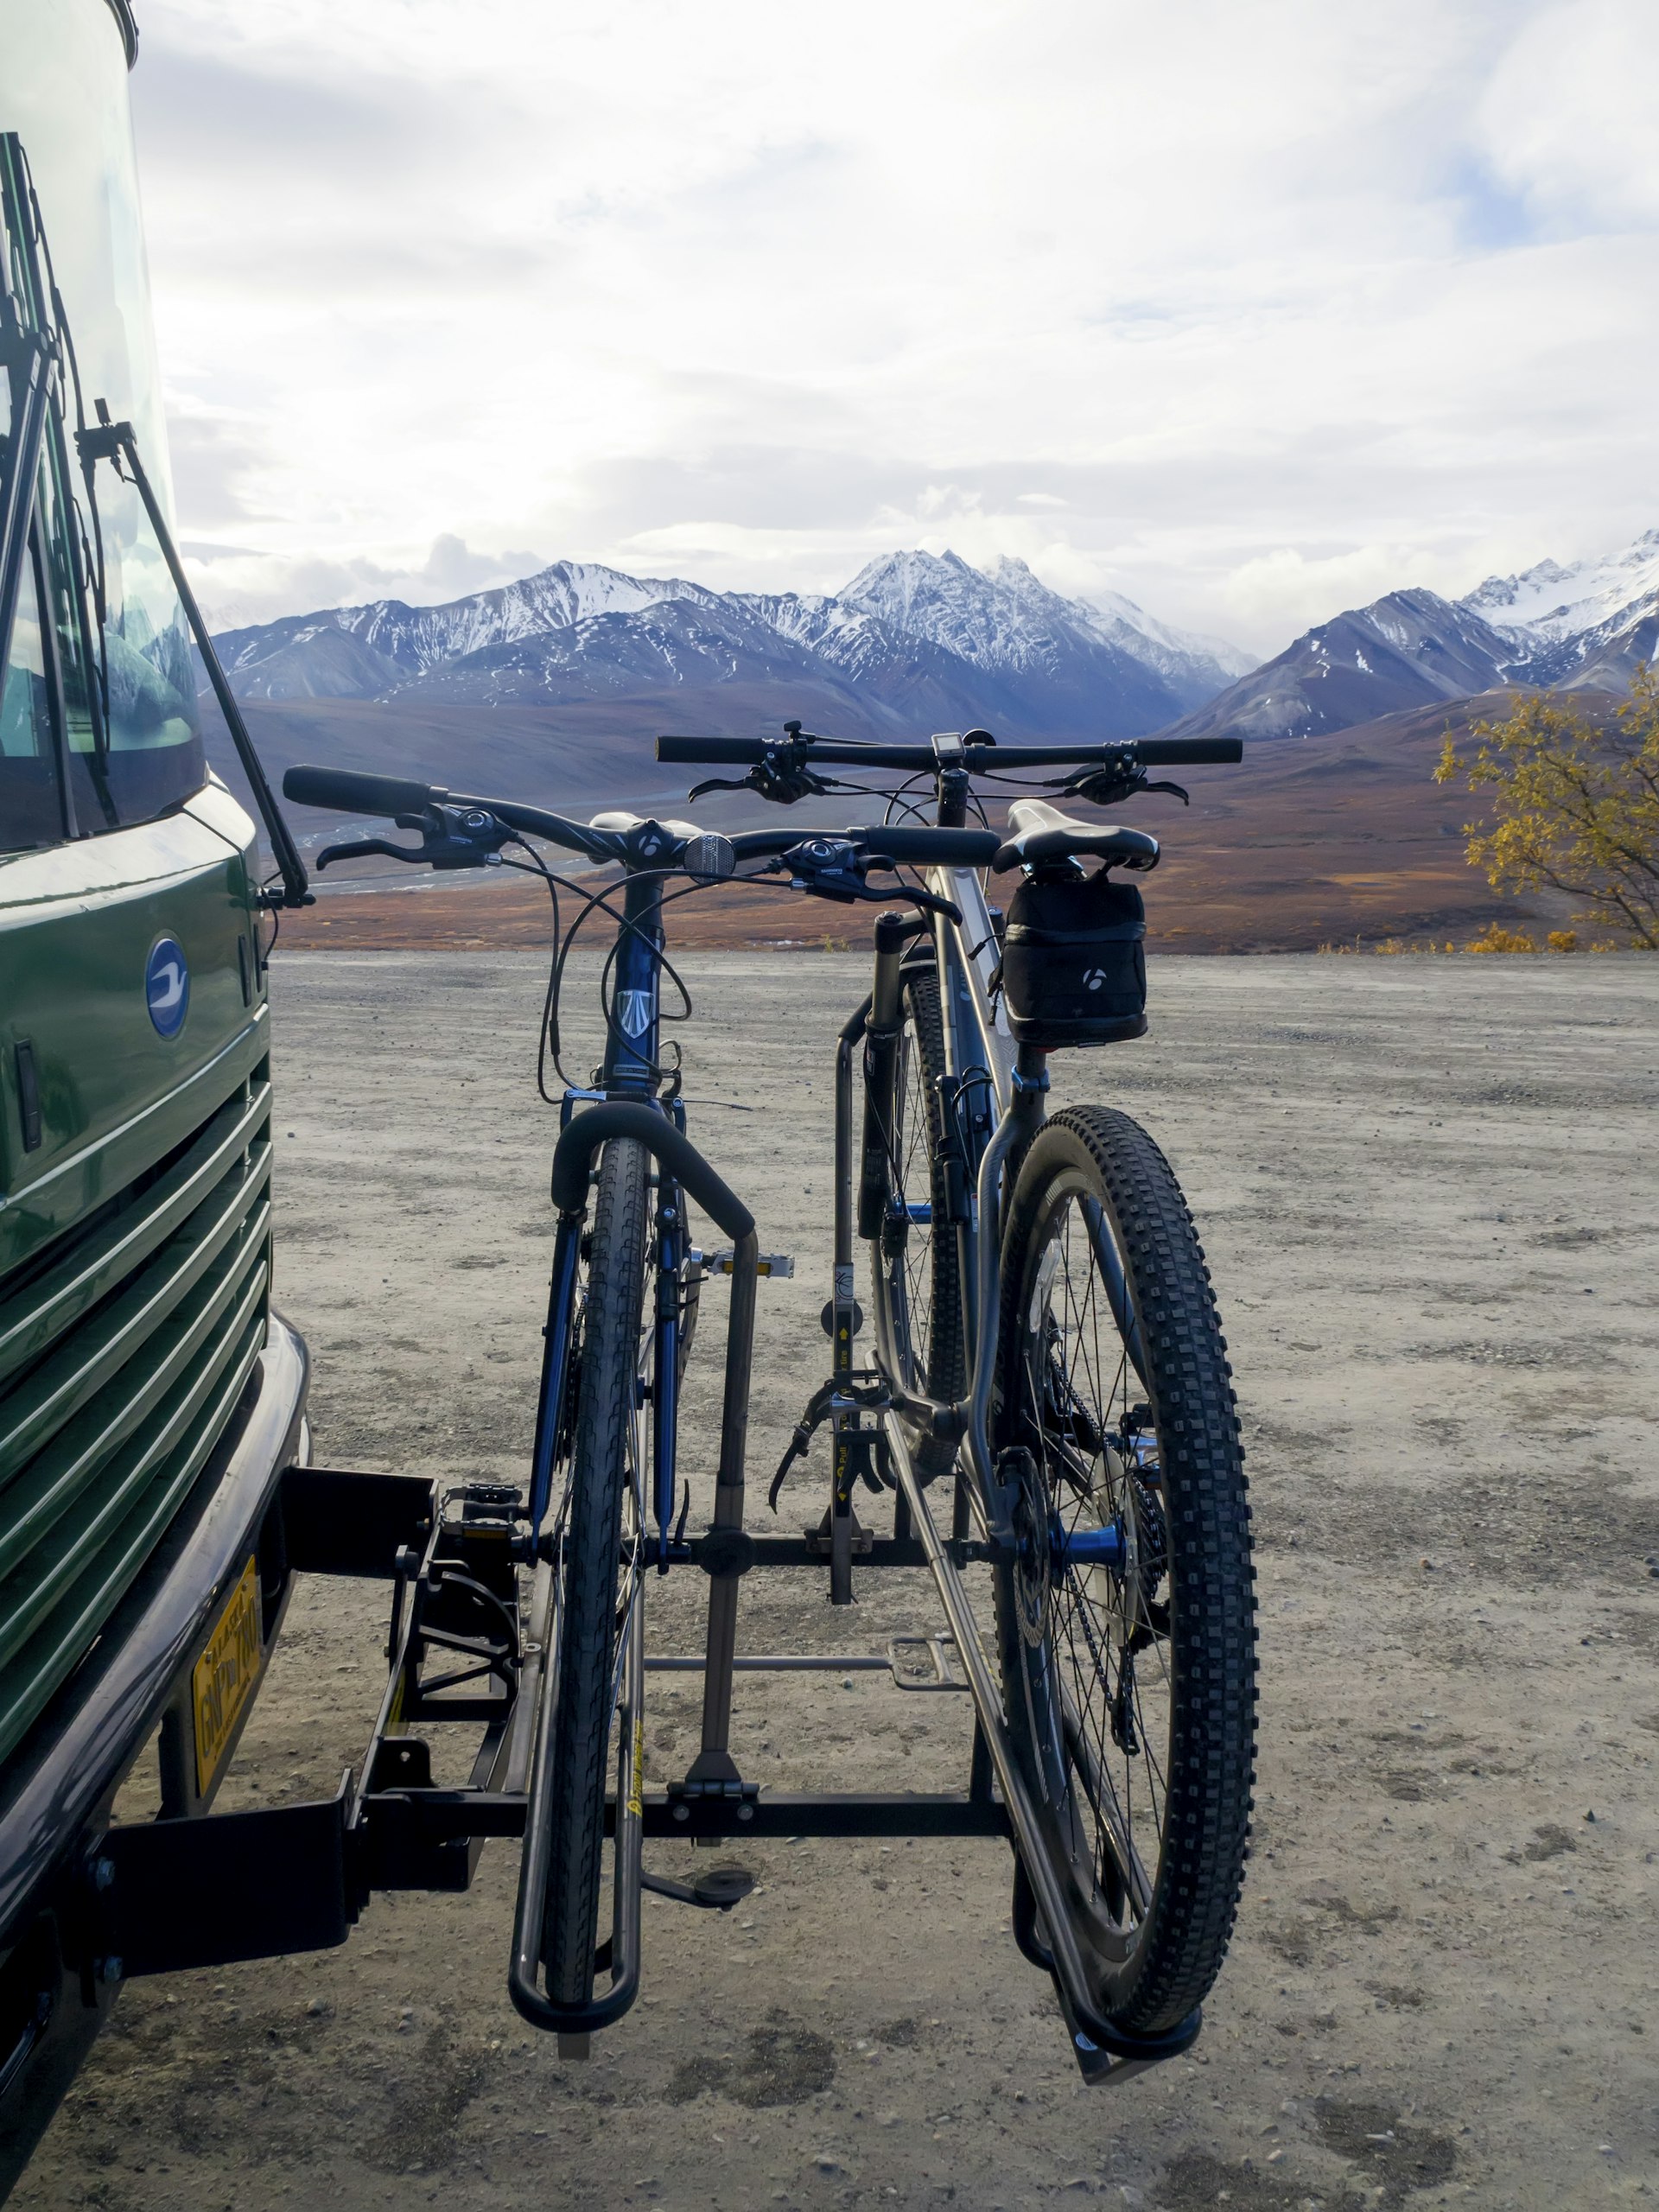 Two Bikes on National Park Bus, Denali National Park